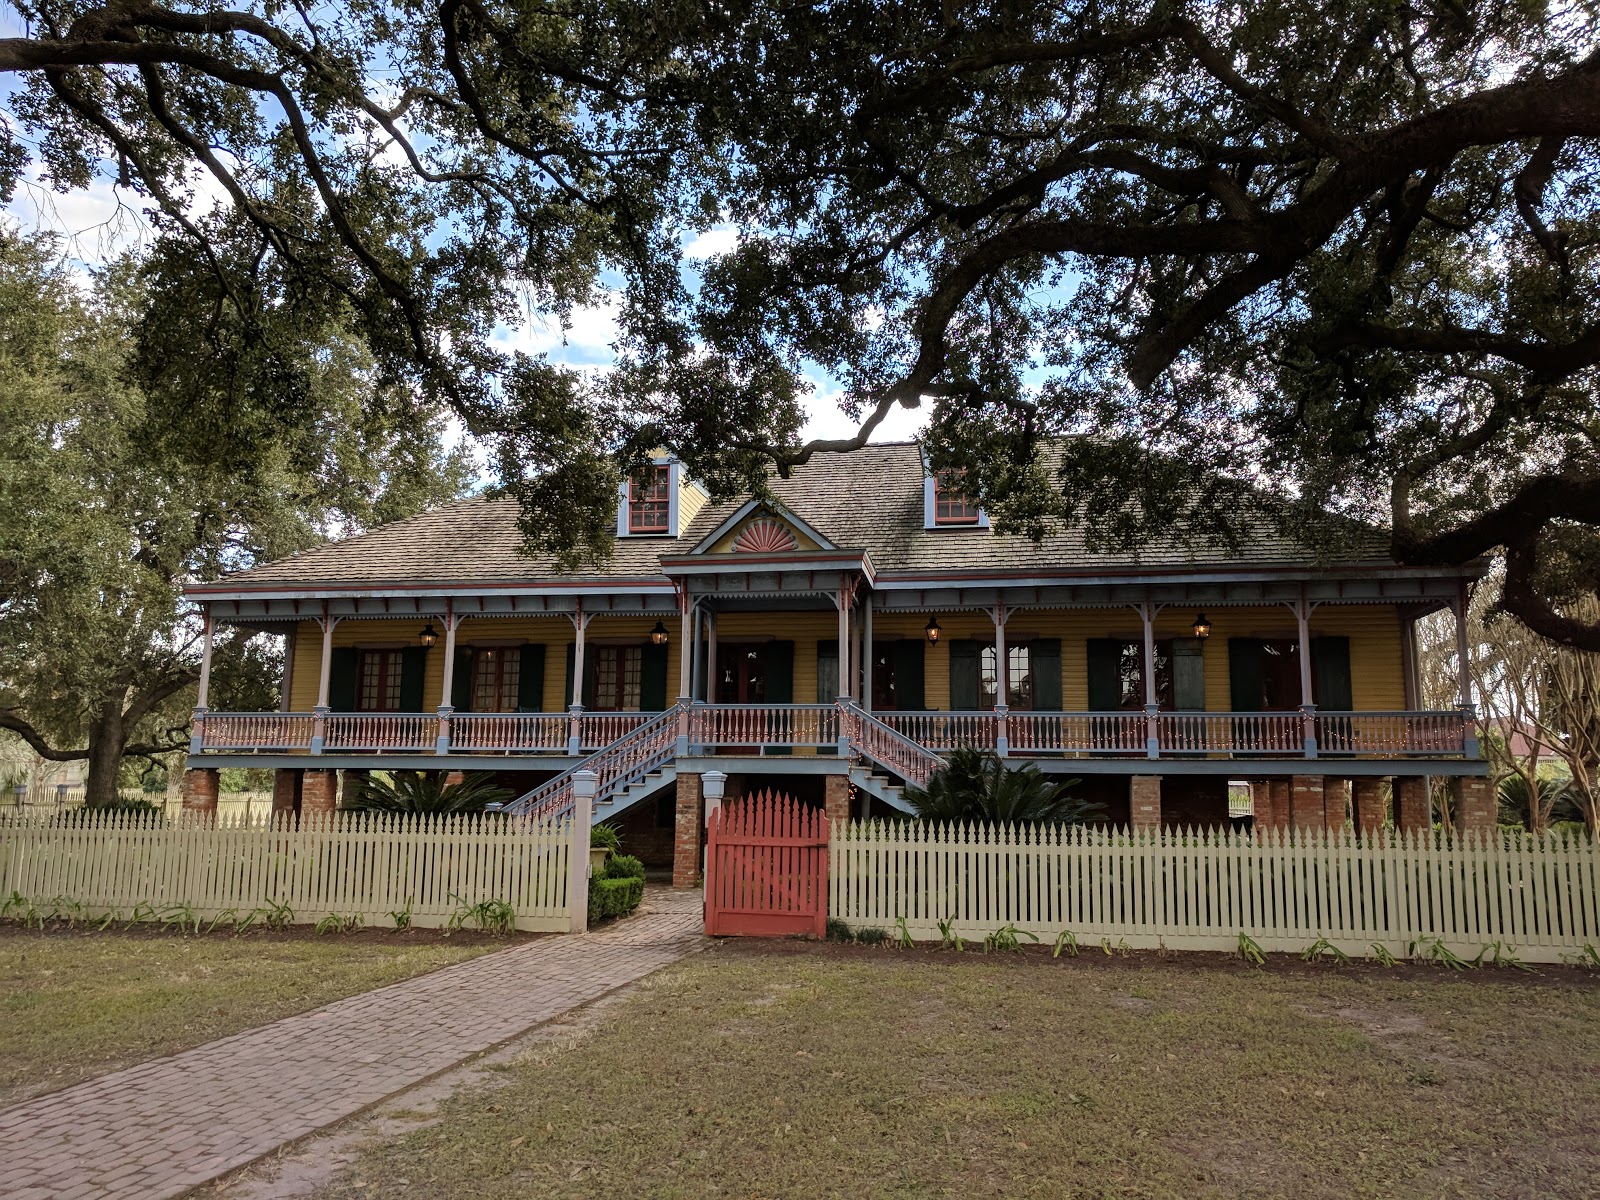 Laura: Louisiana's Creole Heritage Site